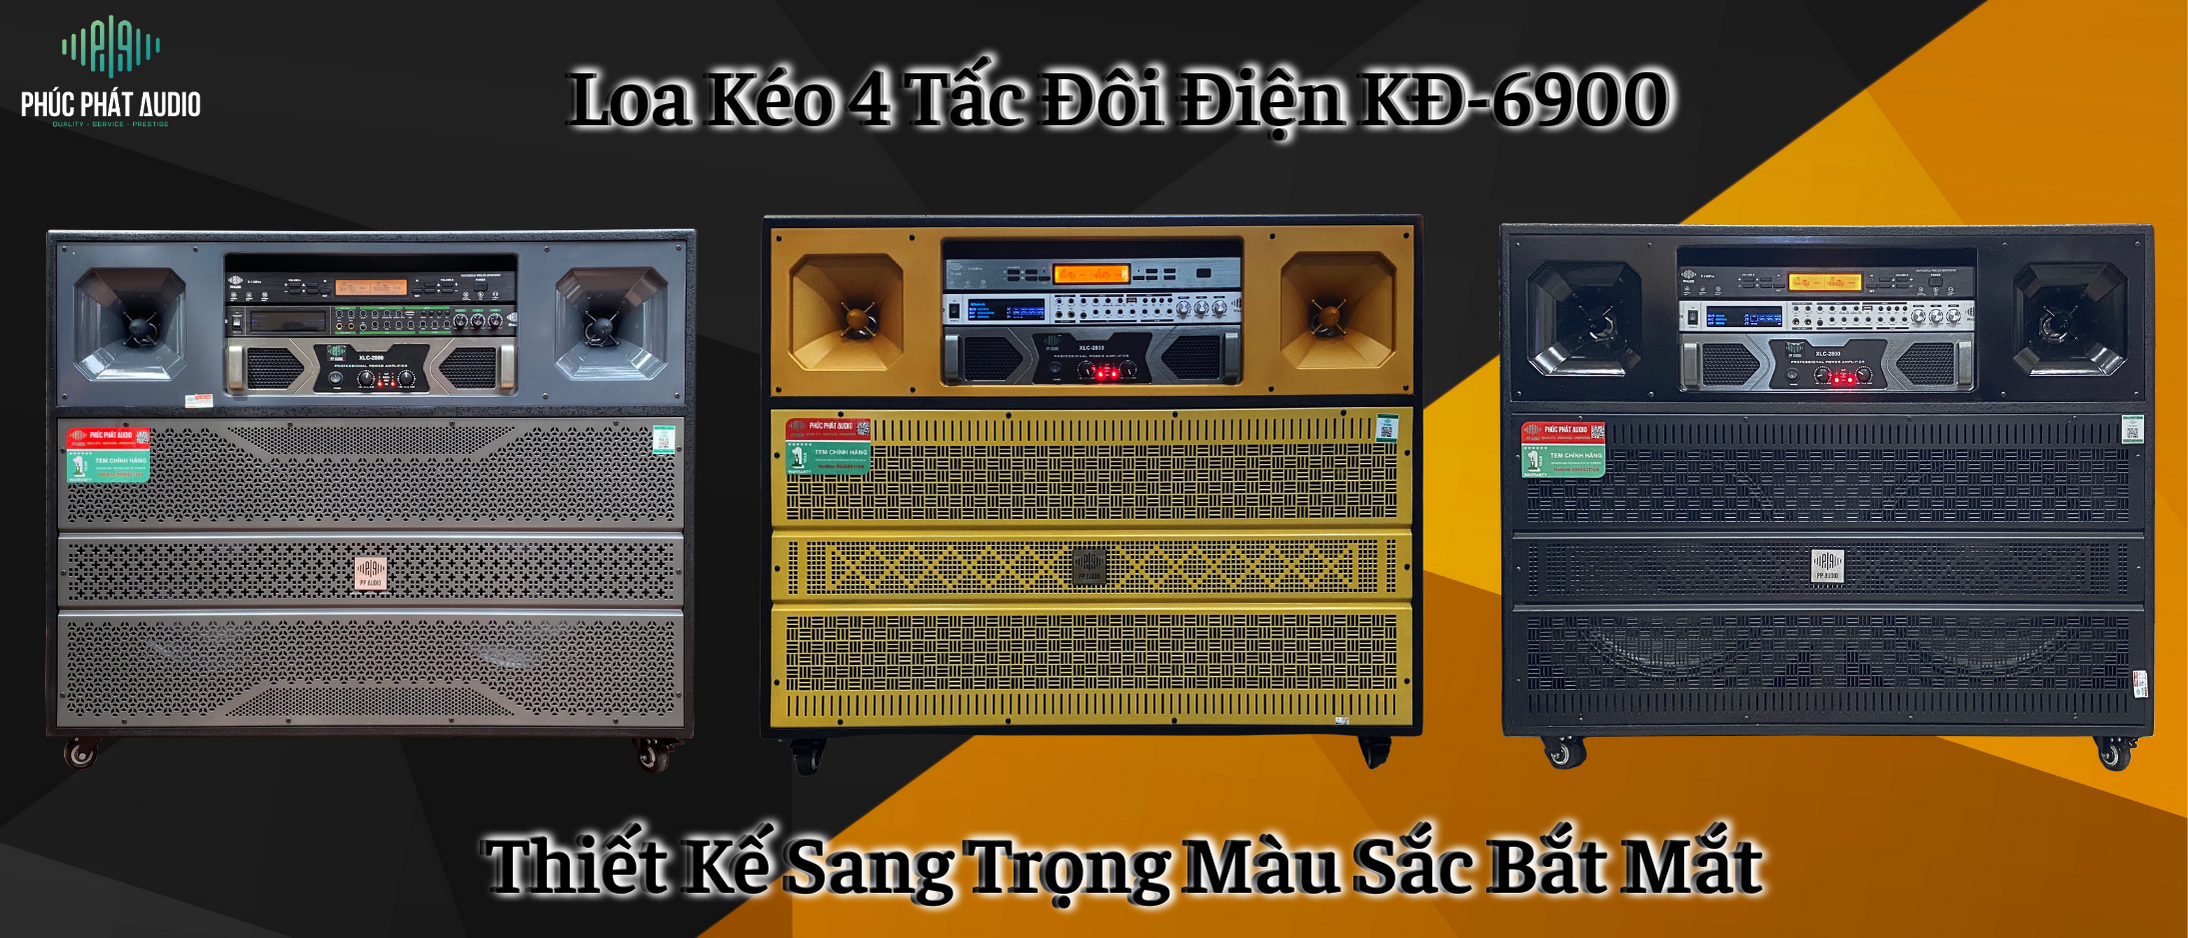 https://ppaudio.vn/loa-keo-dien-bass-4-tac-doi-ppa-kd-6900-vang-co